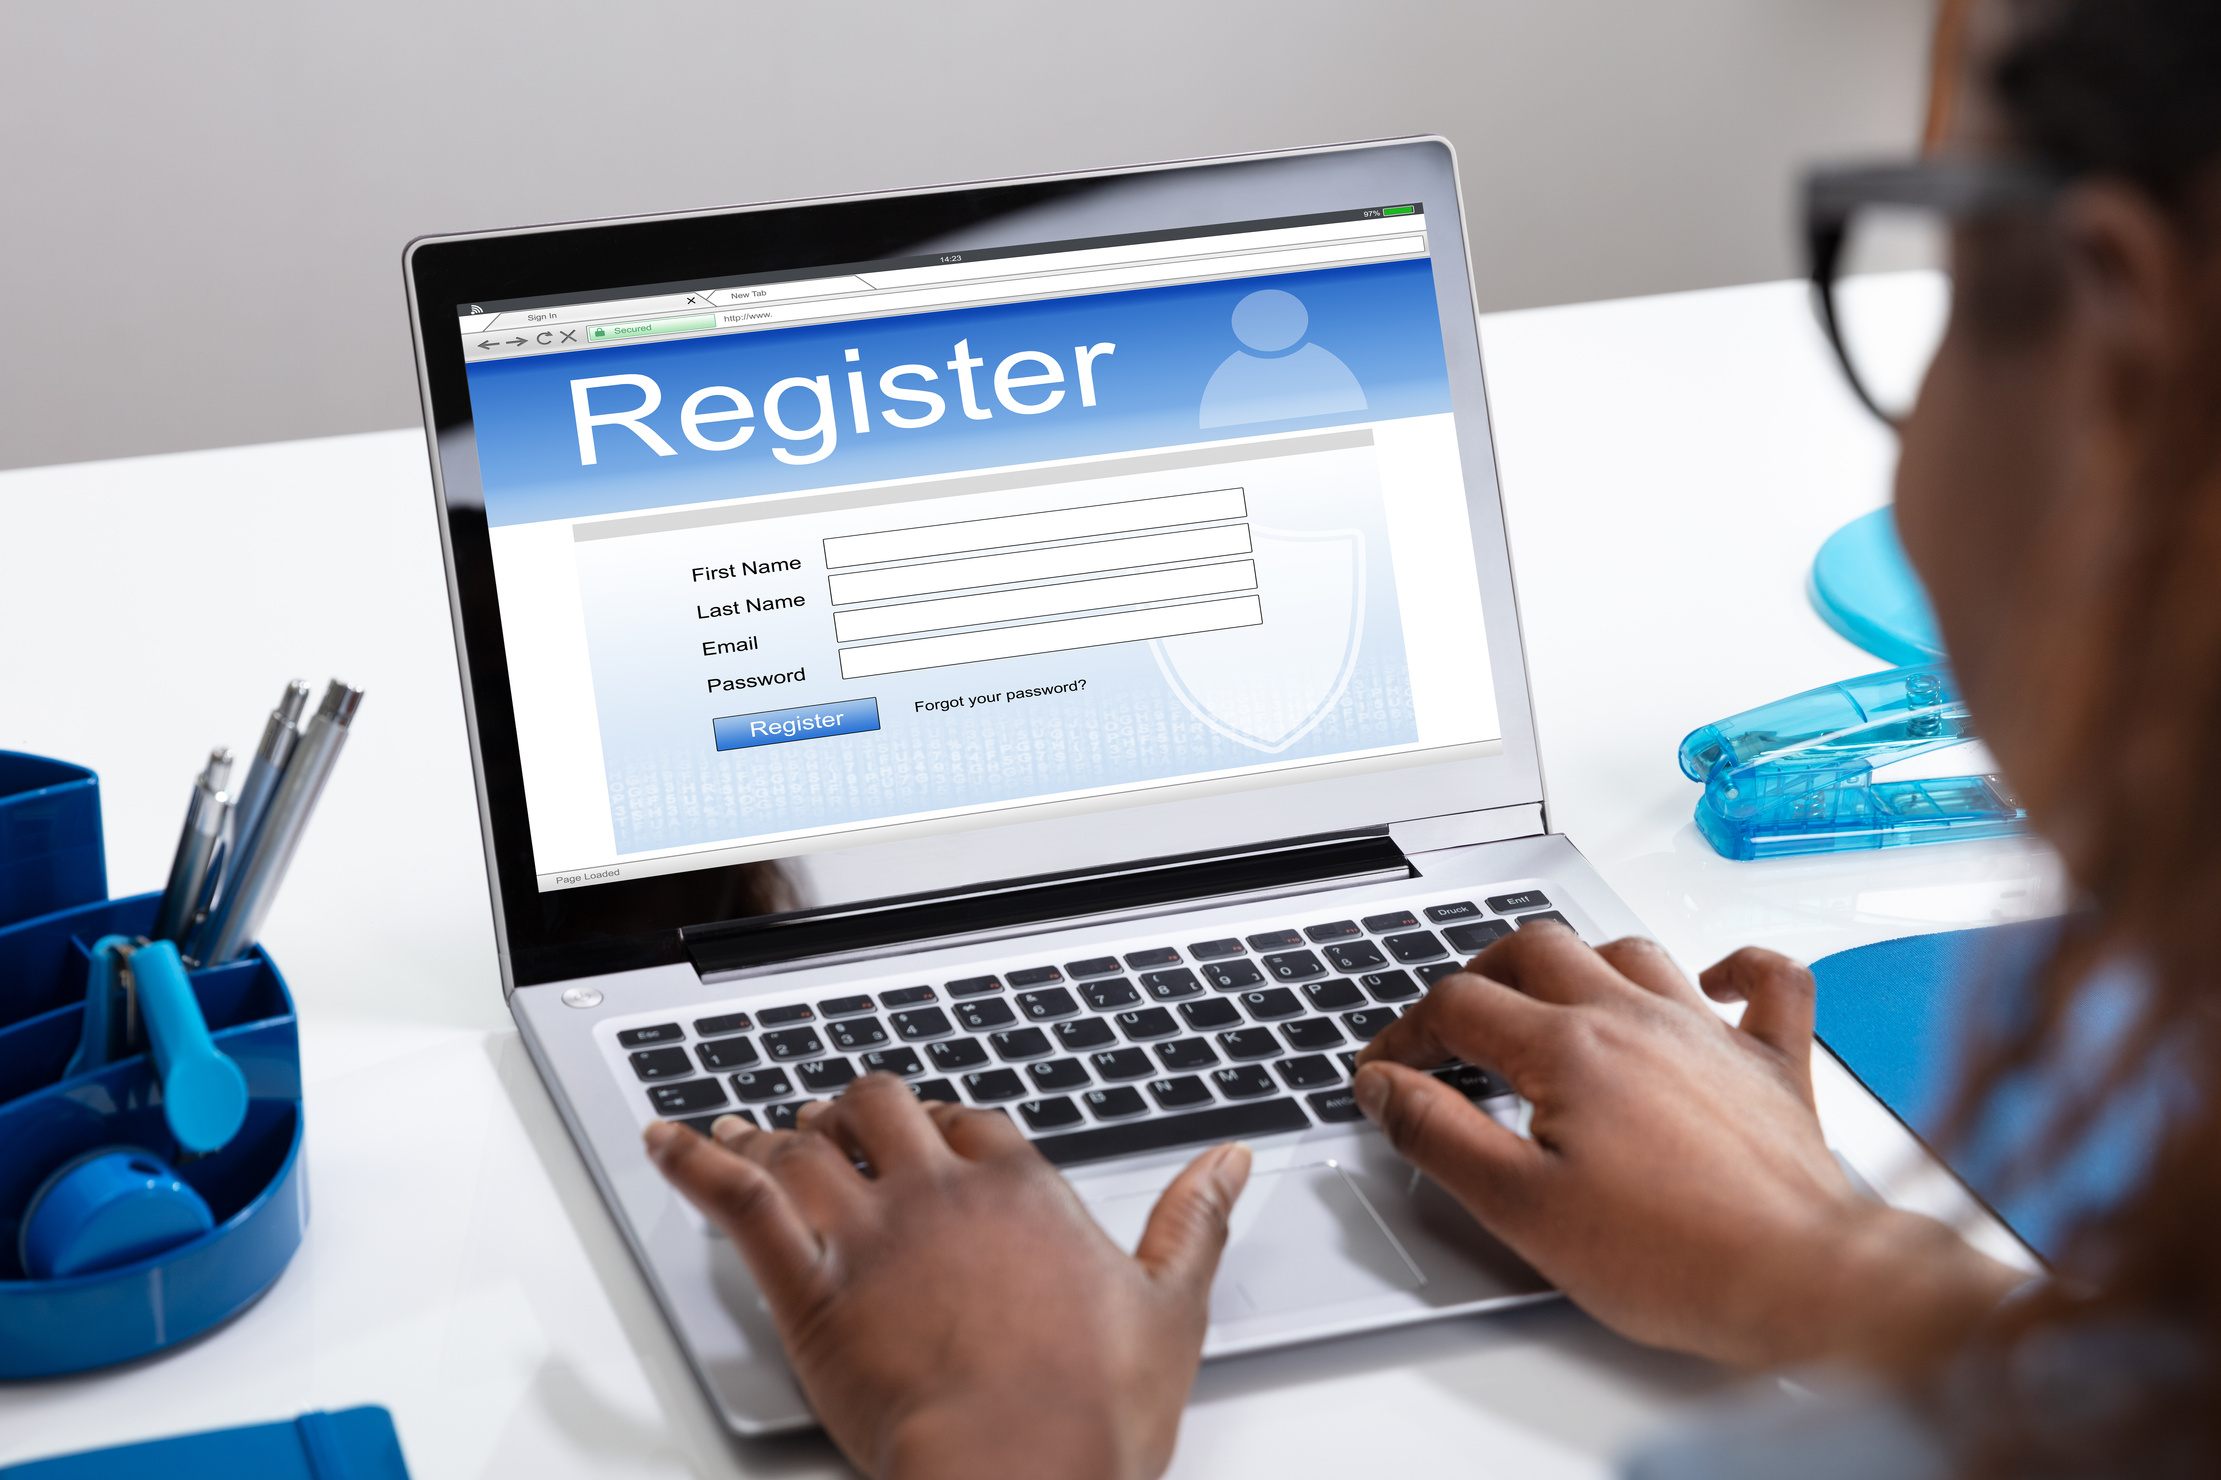 Businesswoman's Hand Filing Online Registration Form On Laptop